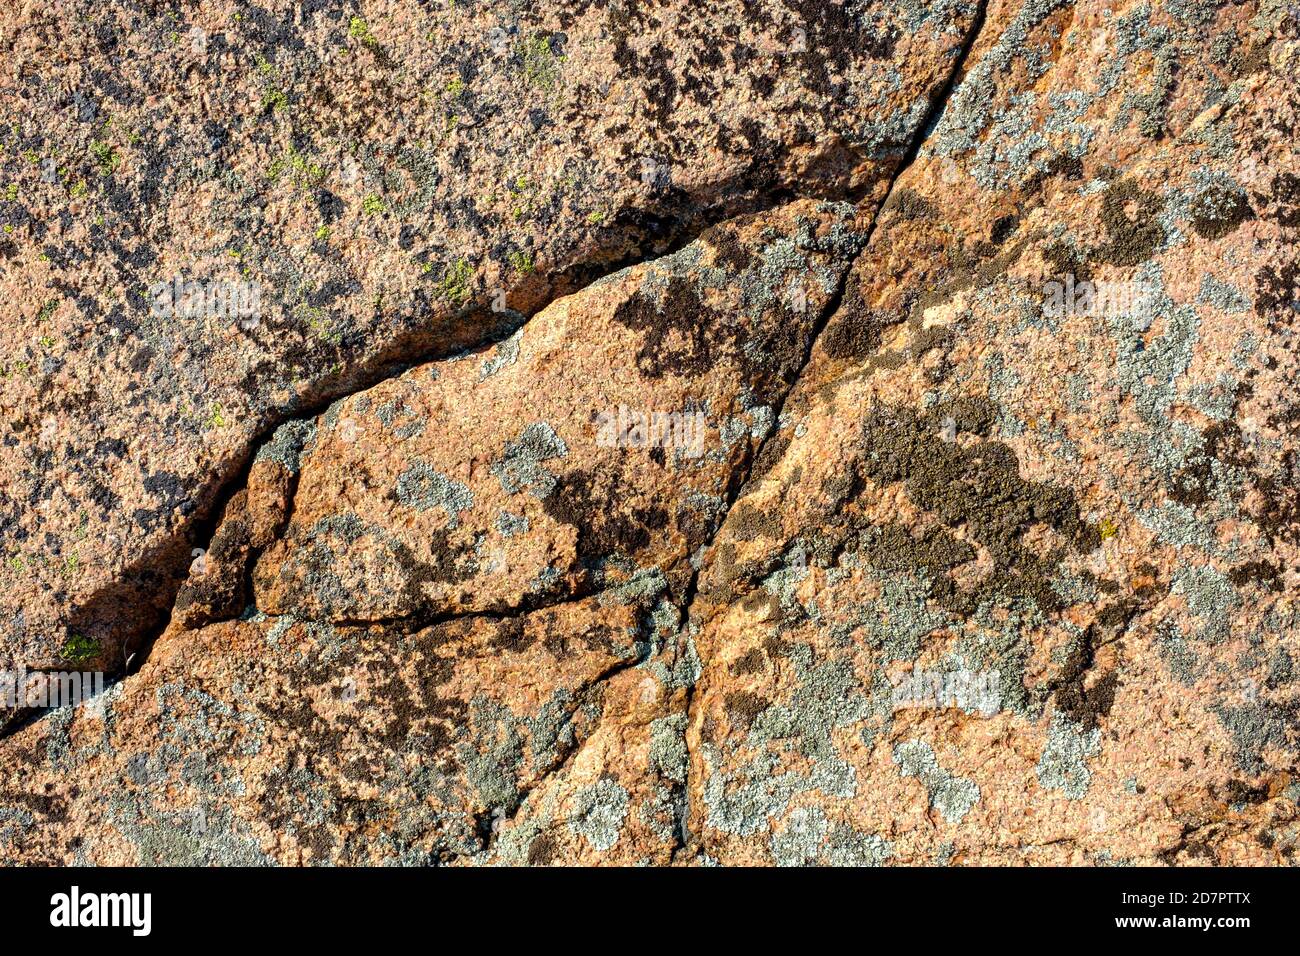 Smooth granite, with lichens, archipelago landscape, rocky coast, archipelago coast, smoegen, archipelago, Bohuslaen province, Vaestra Goetalands Stock Photo